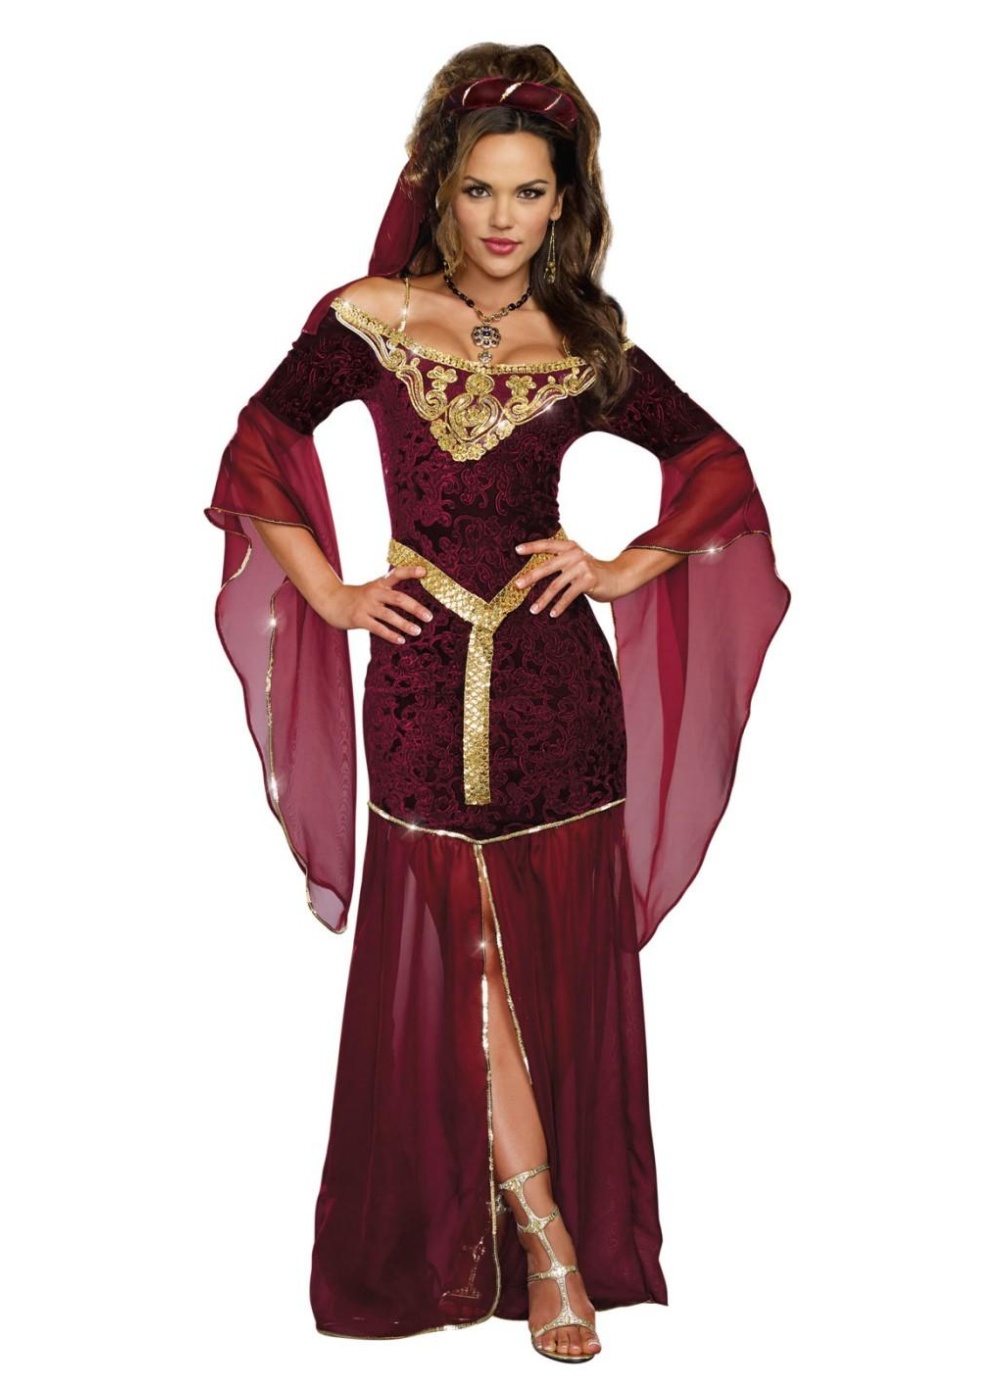  Womens Medieval Mistress Renaissance Costume